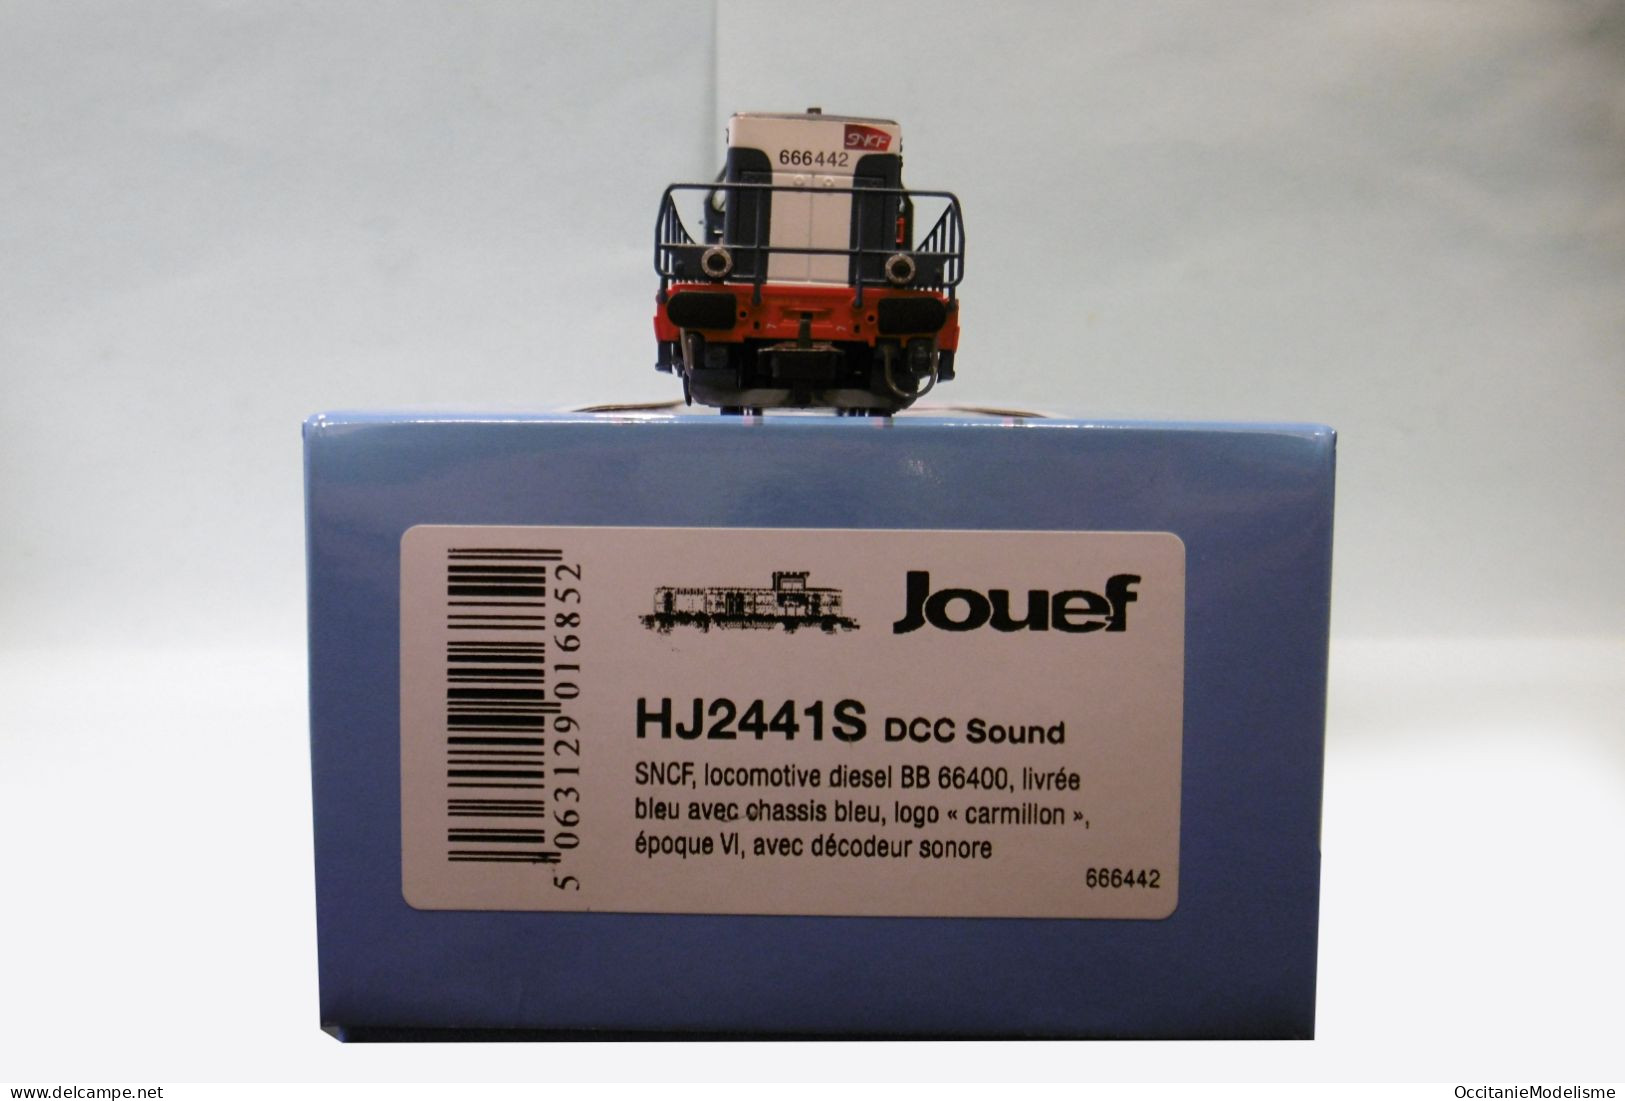 Jouef - Locomotive DIESEL BB 666442 66400 SNCF bleu ép. VI DCC Sound réf. HJ2441S Neuf HO 1/87